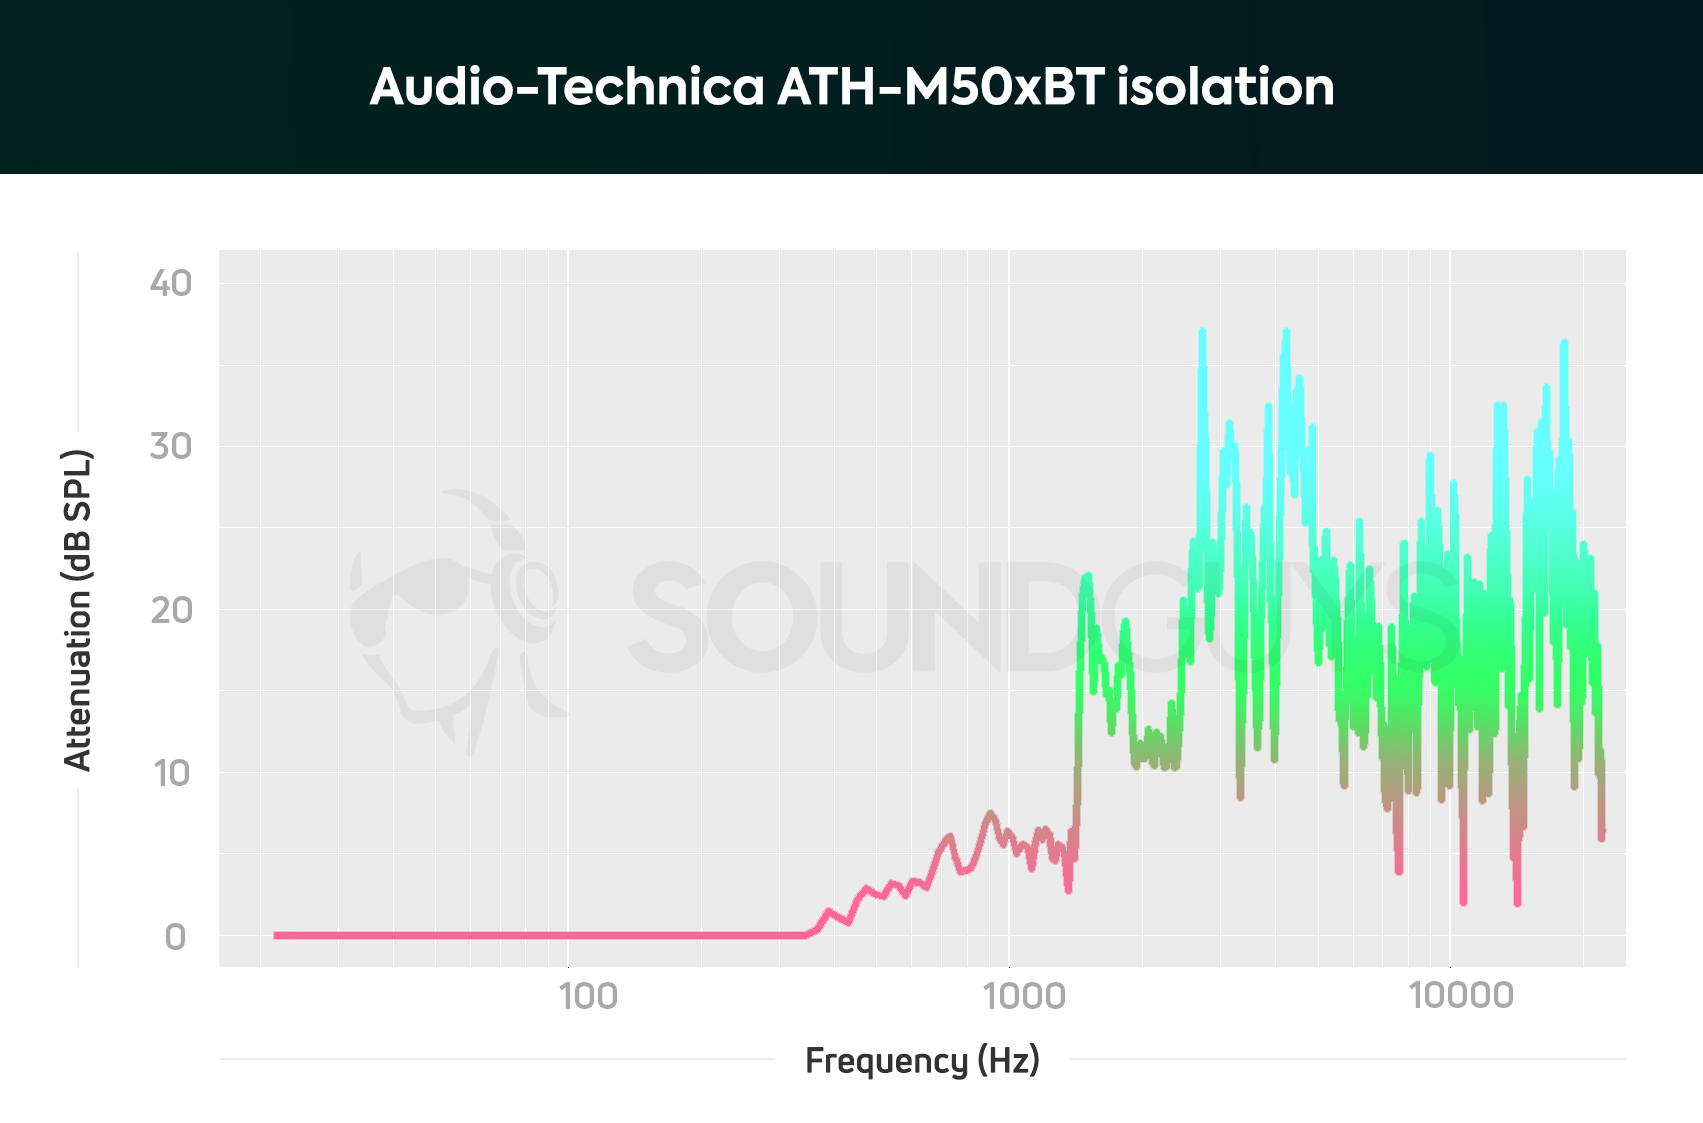 Audio-Technica ATH-M50xBT isolation chart.